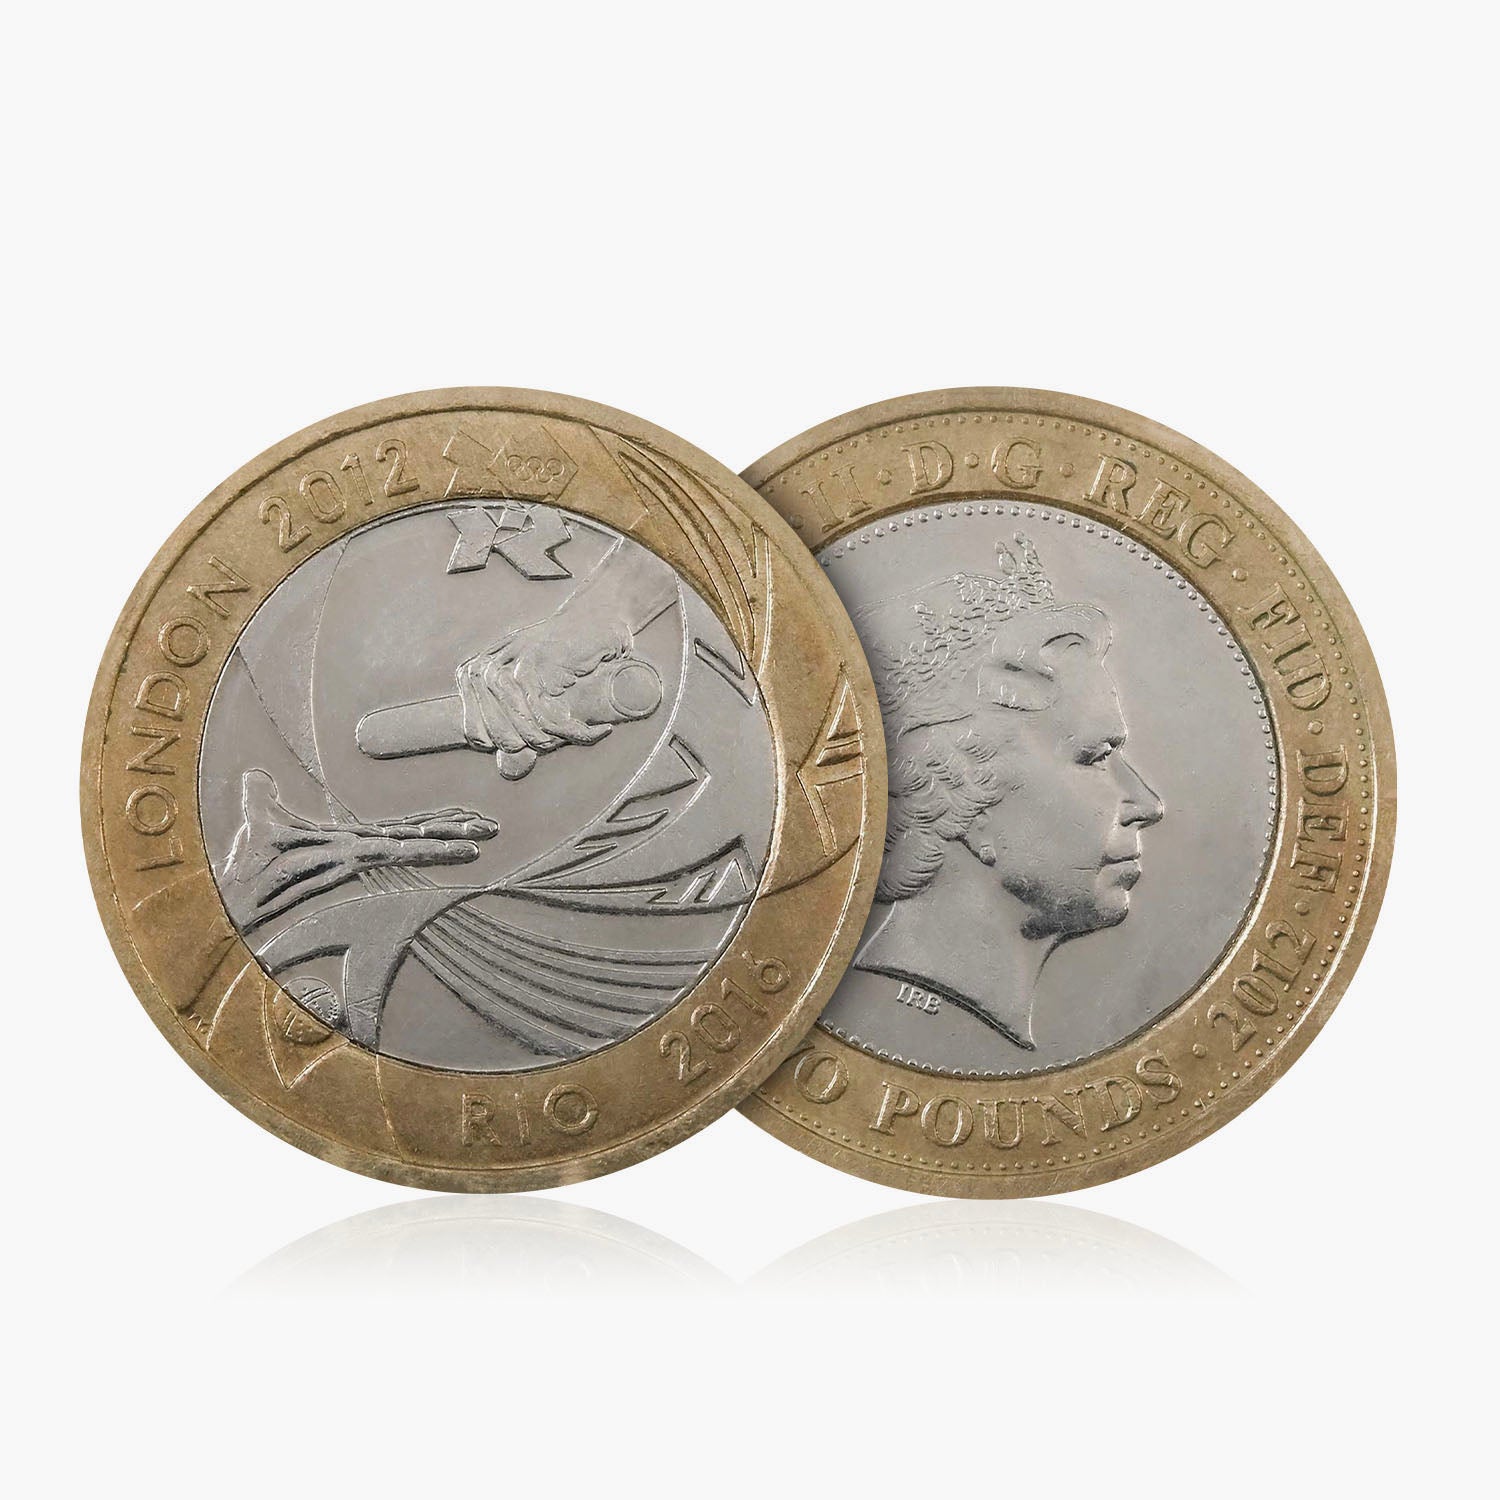 2012 Circulated Olympics Handover To Rio UK £2 Coin